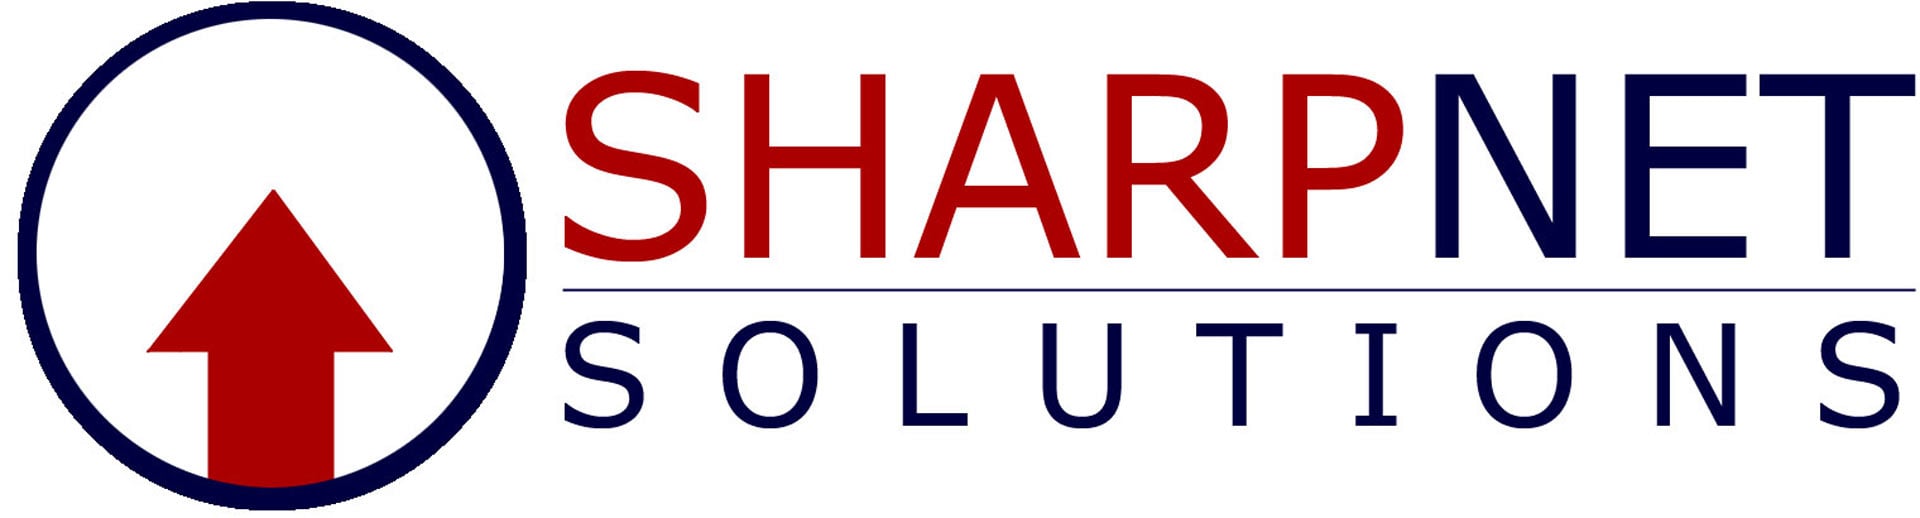 Best Real Estate SEO Company Logo: SharpNet